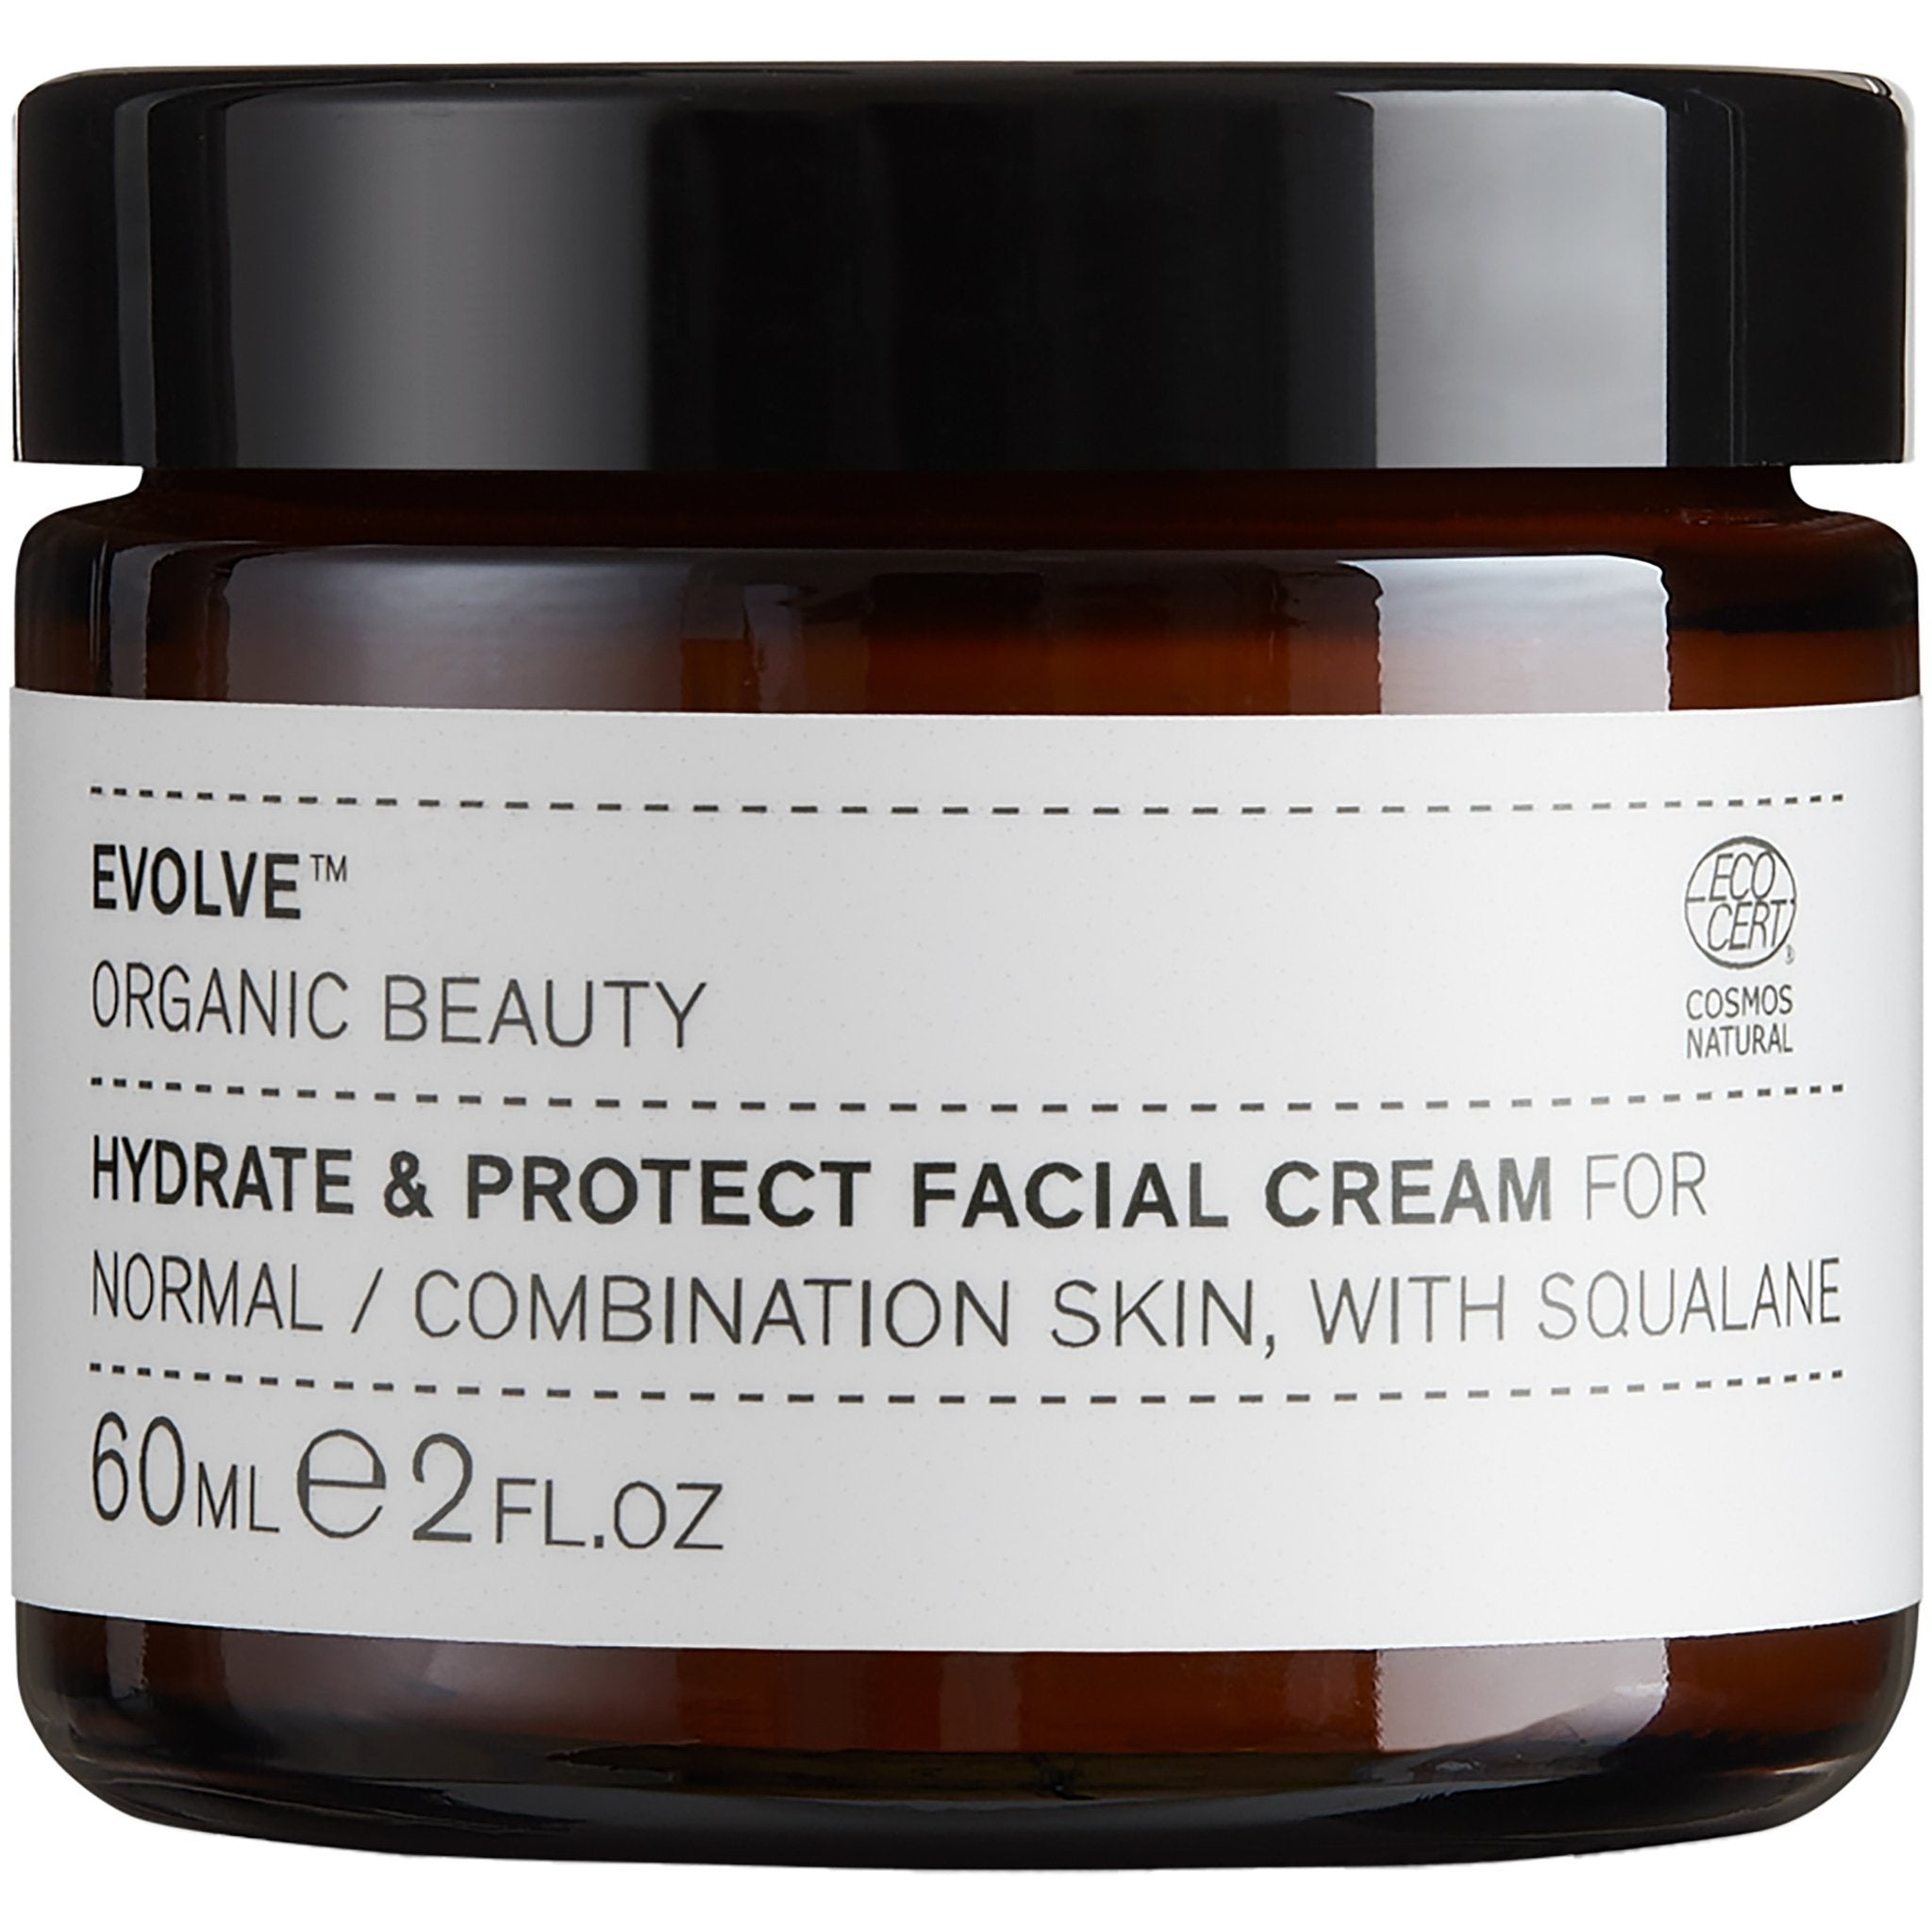 Hydrate & Protect Facial Cream - mypure.co.uk